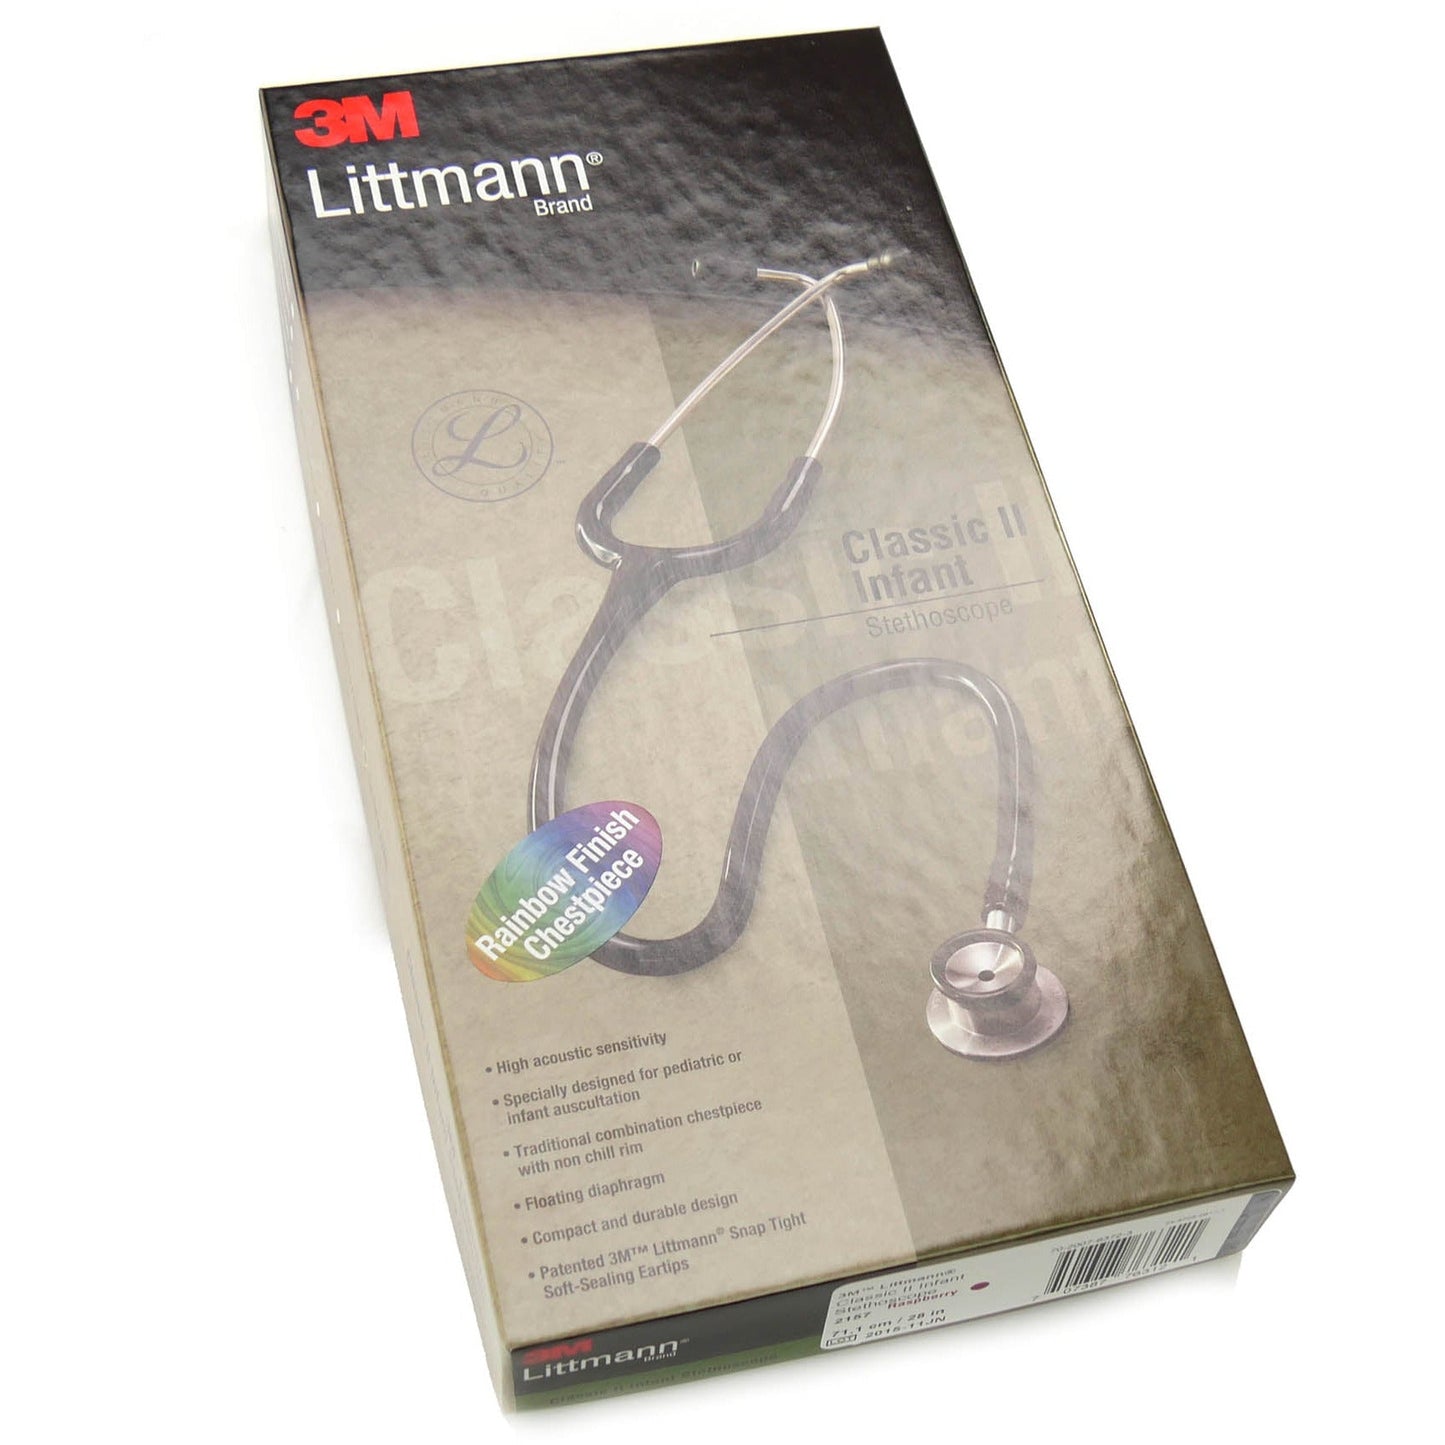 Stetoskop 3M™ Littmann® Classic II Infant 2157, membranski nastavek v mavričnih barvah, cev v barvi maline